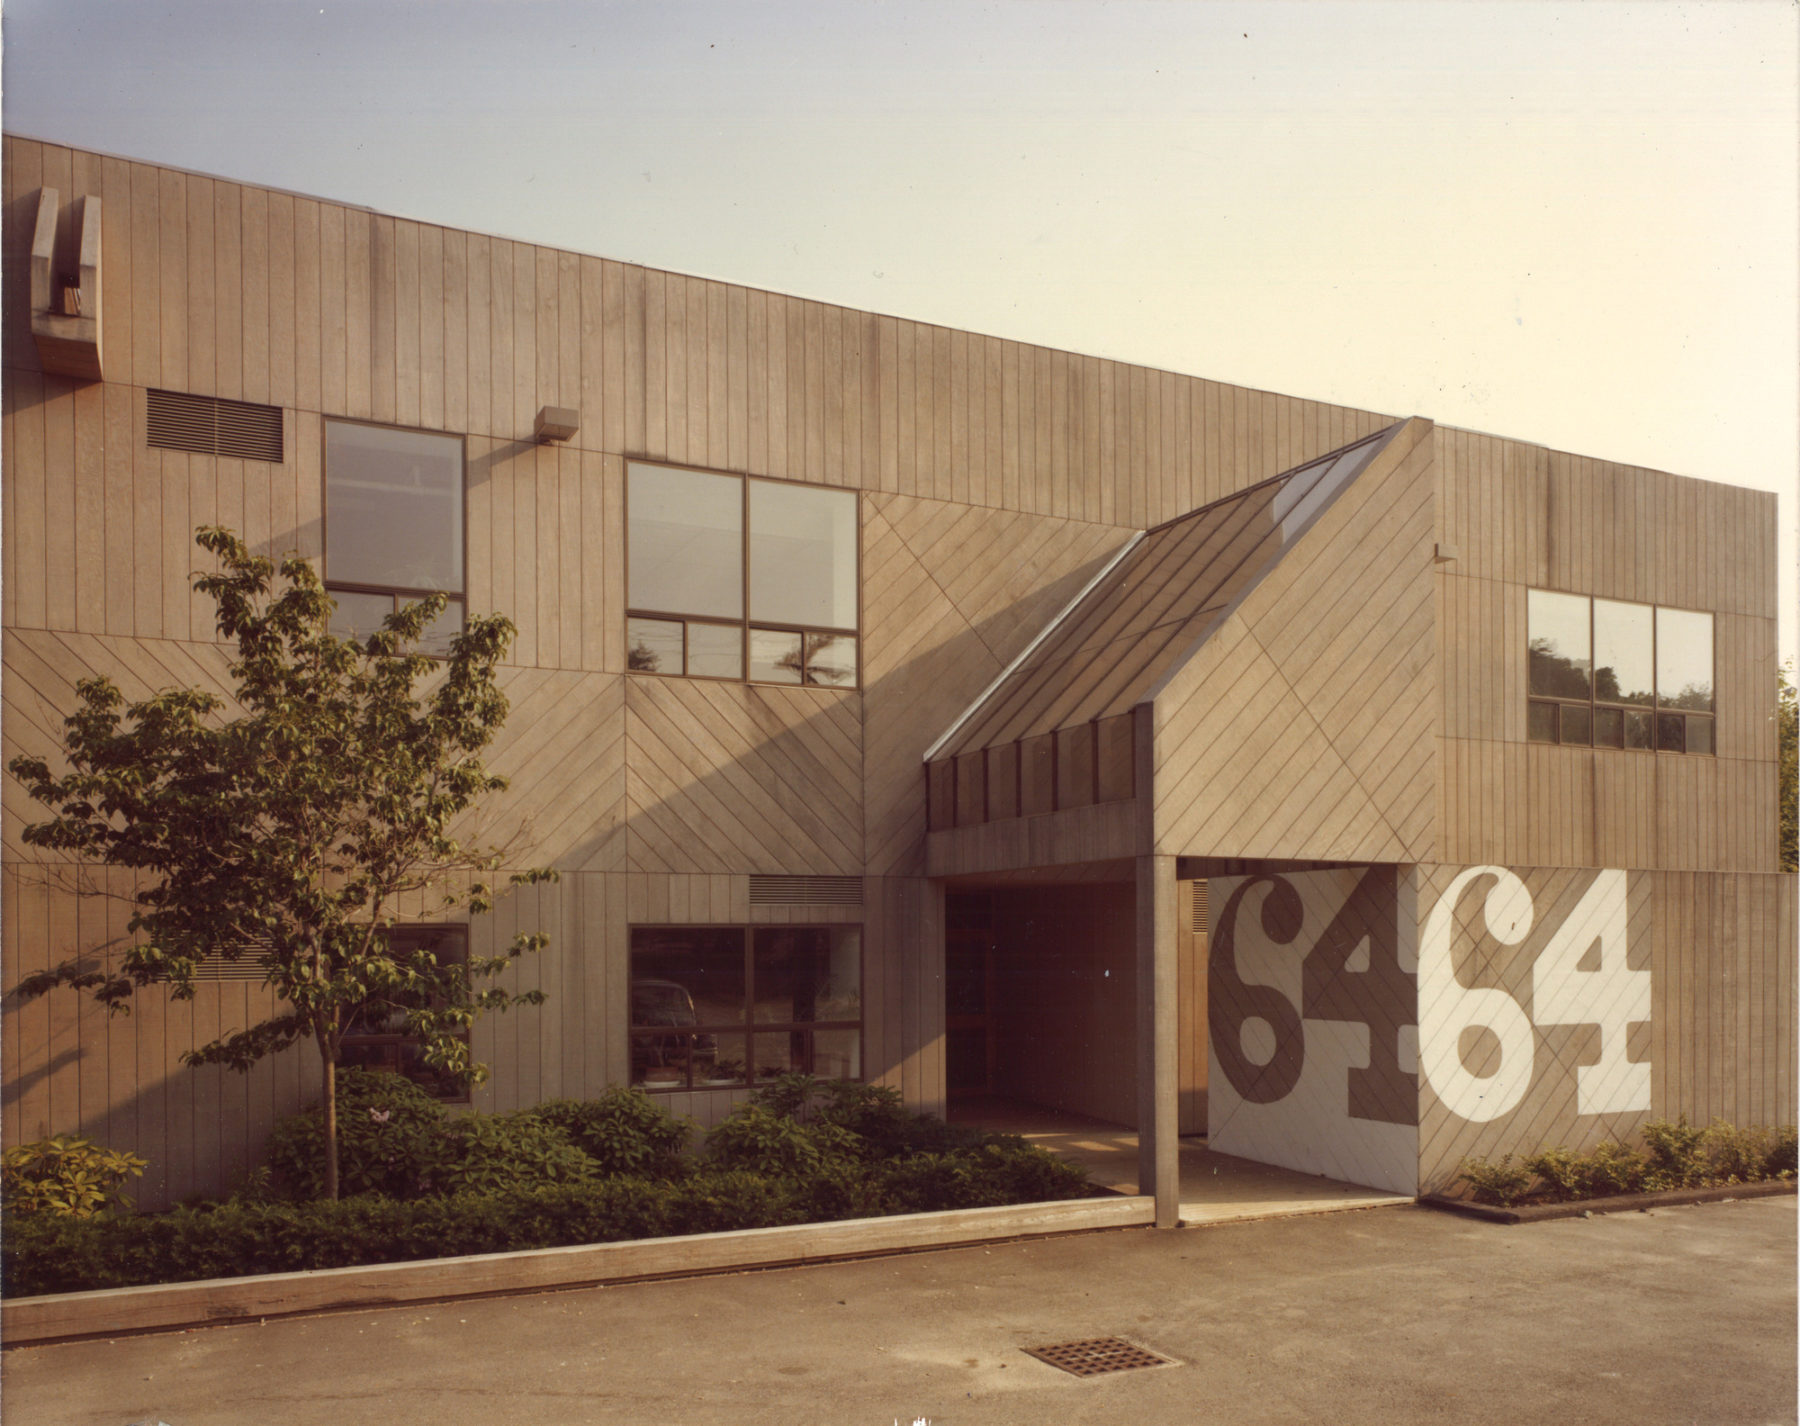 Historical photo of exterior of Sasaki's headquarters